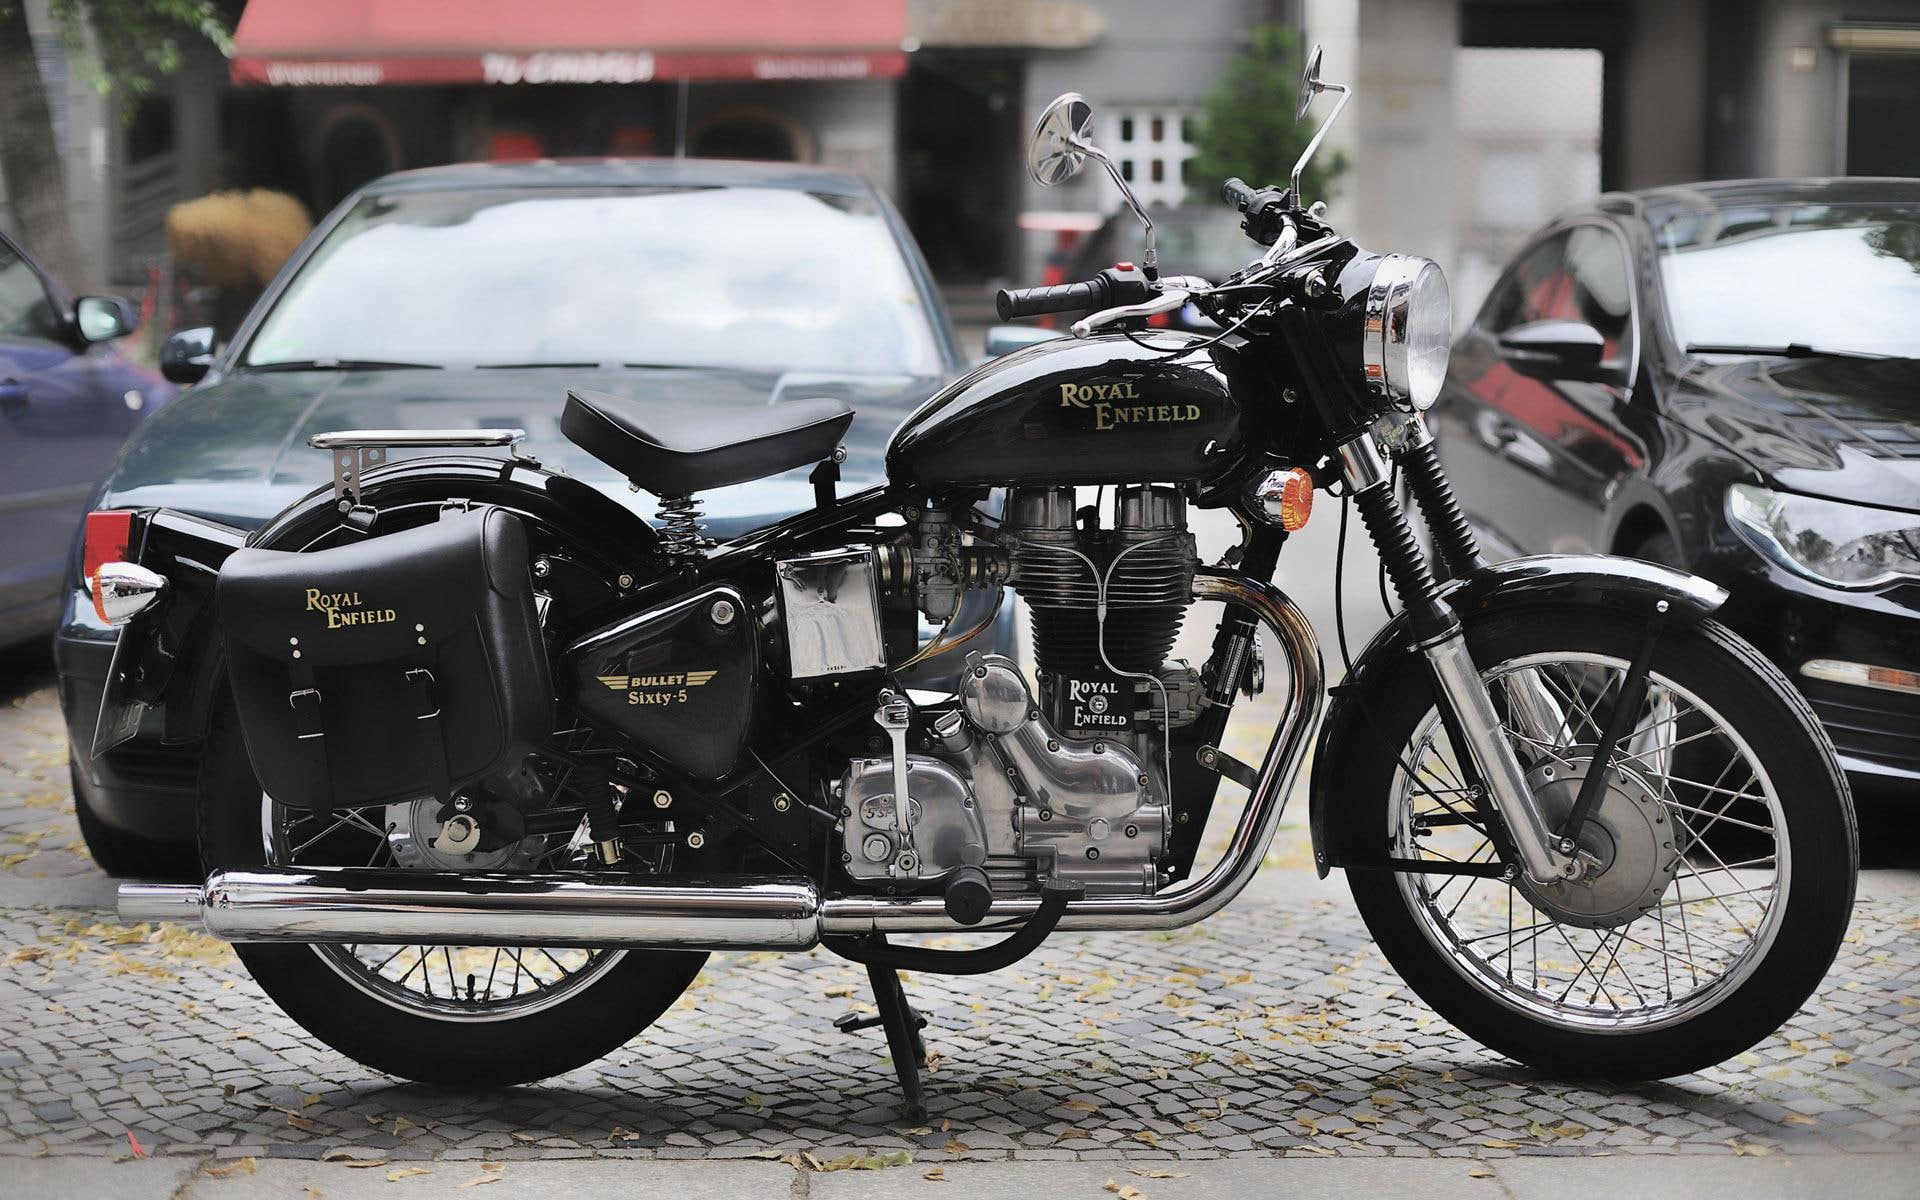 Royal Enfield Bullet Sixty 5, black-and-gray cruiser motorcycle